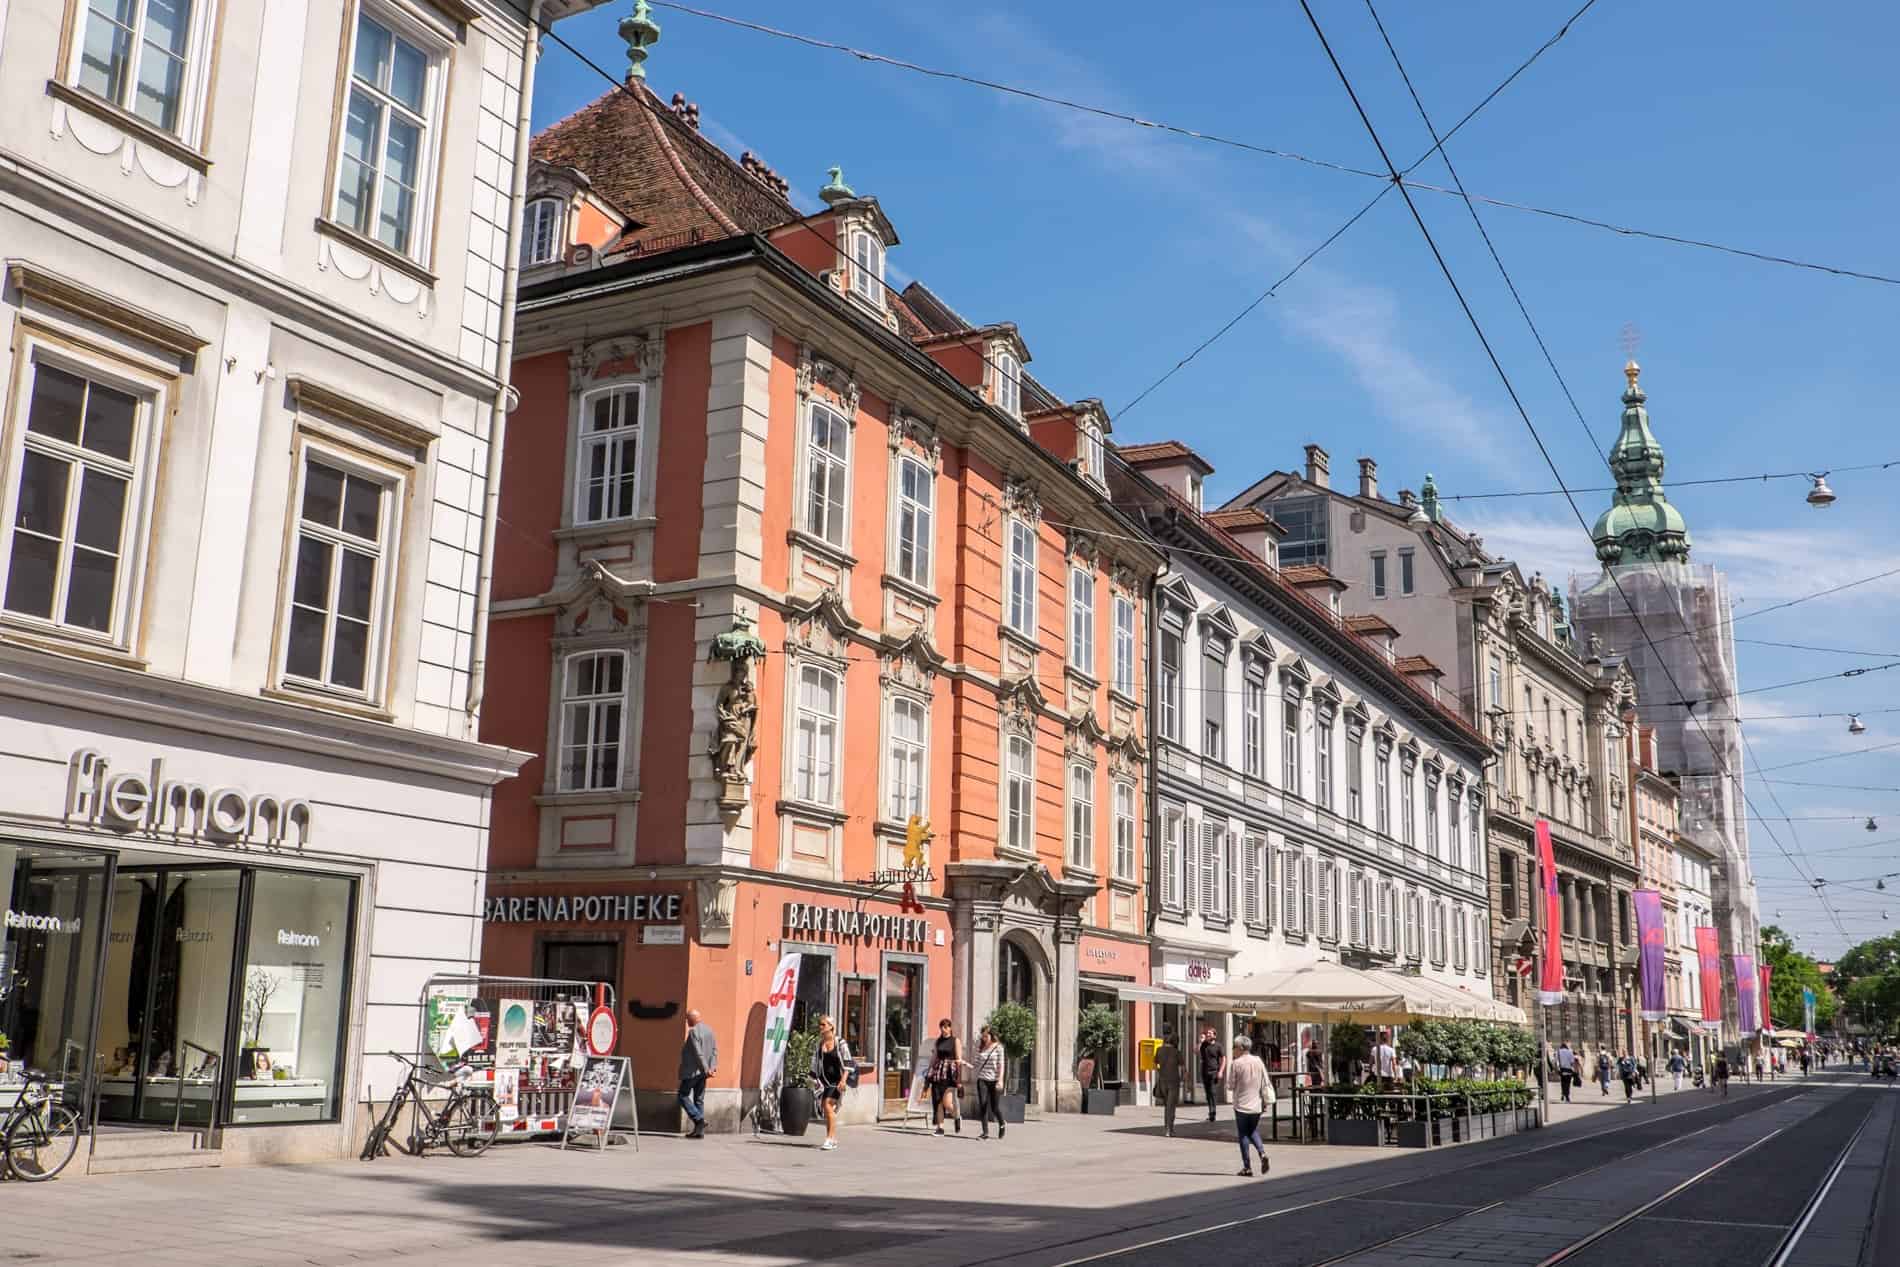 Orange and mocha hued buildings line the busy Herrengasse street in Graz, Austria.